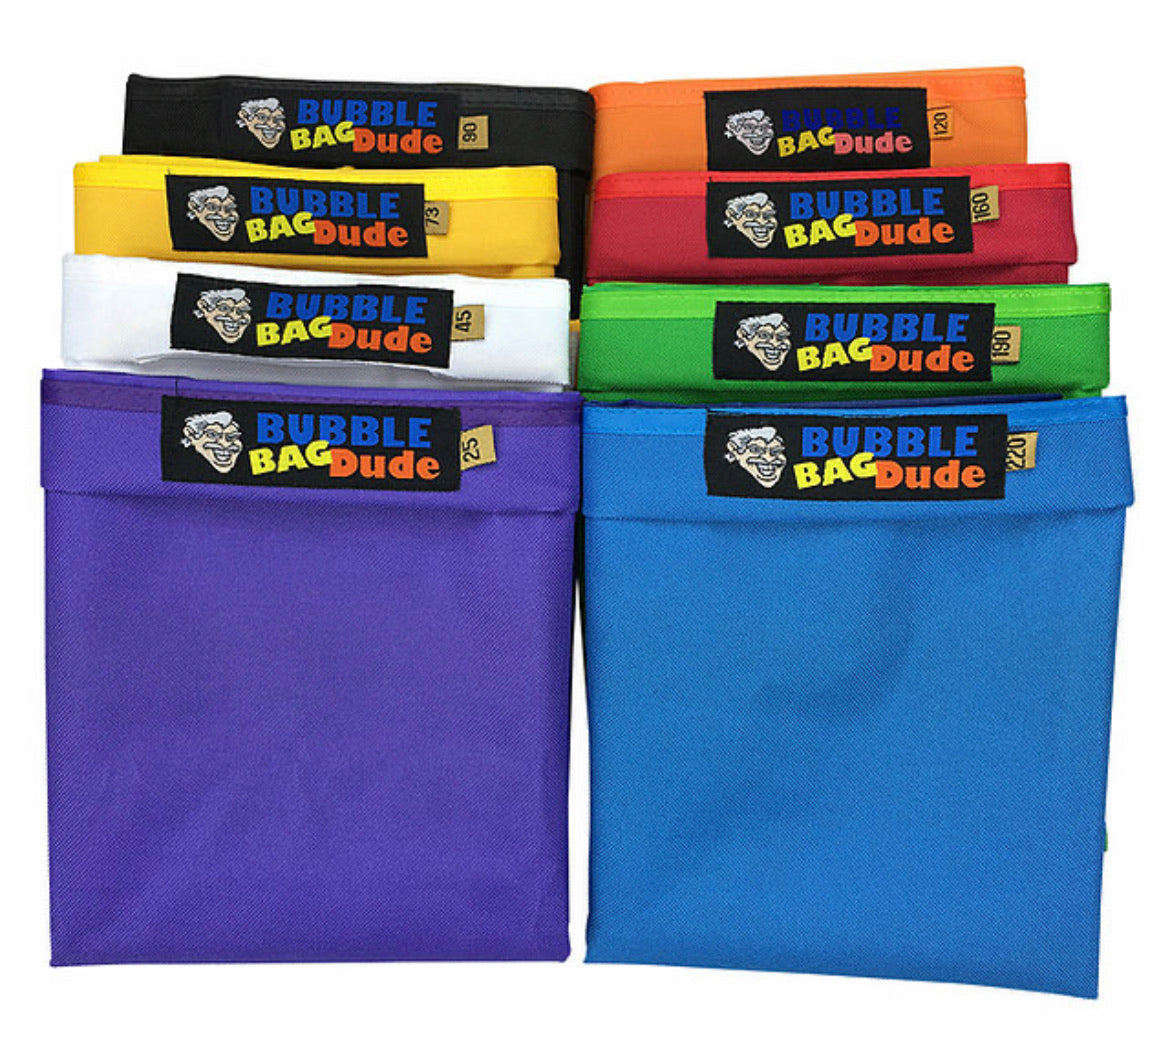 Bubblebagdude 5 GAL-8 Bag Only Kit